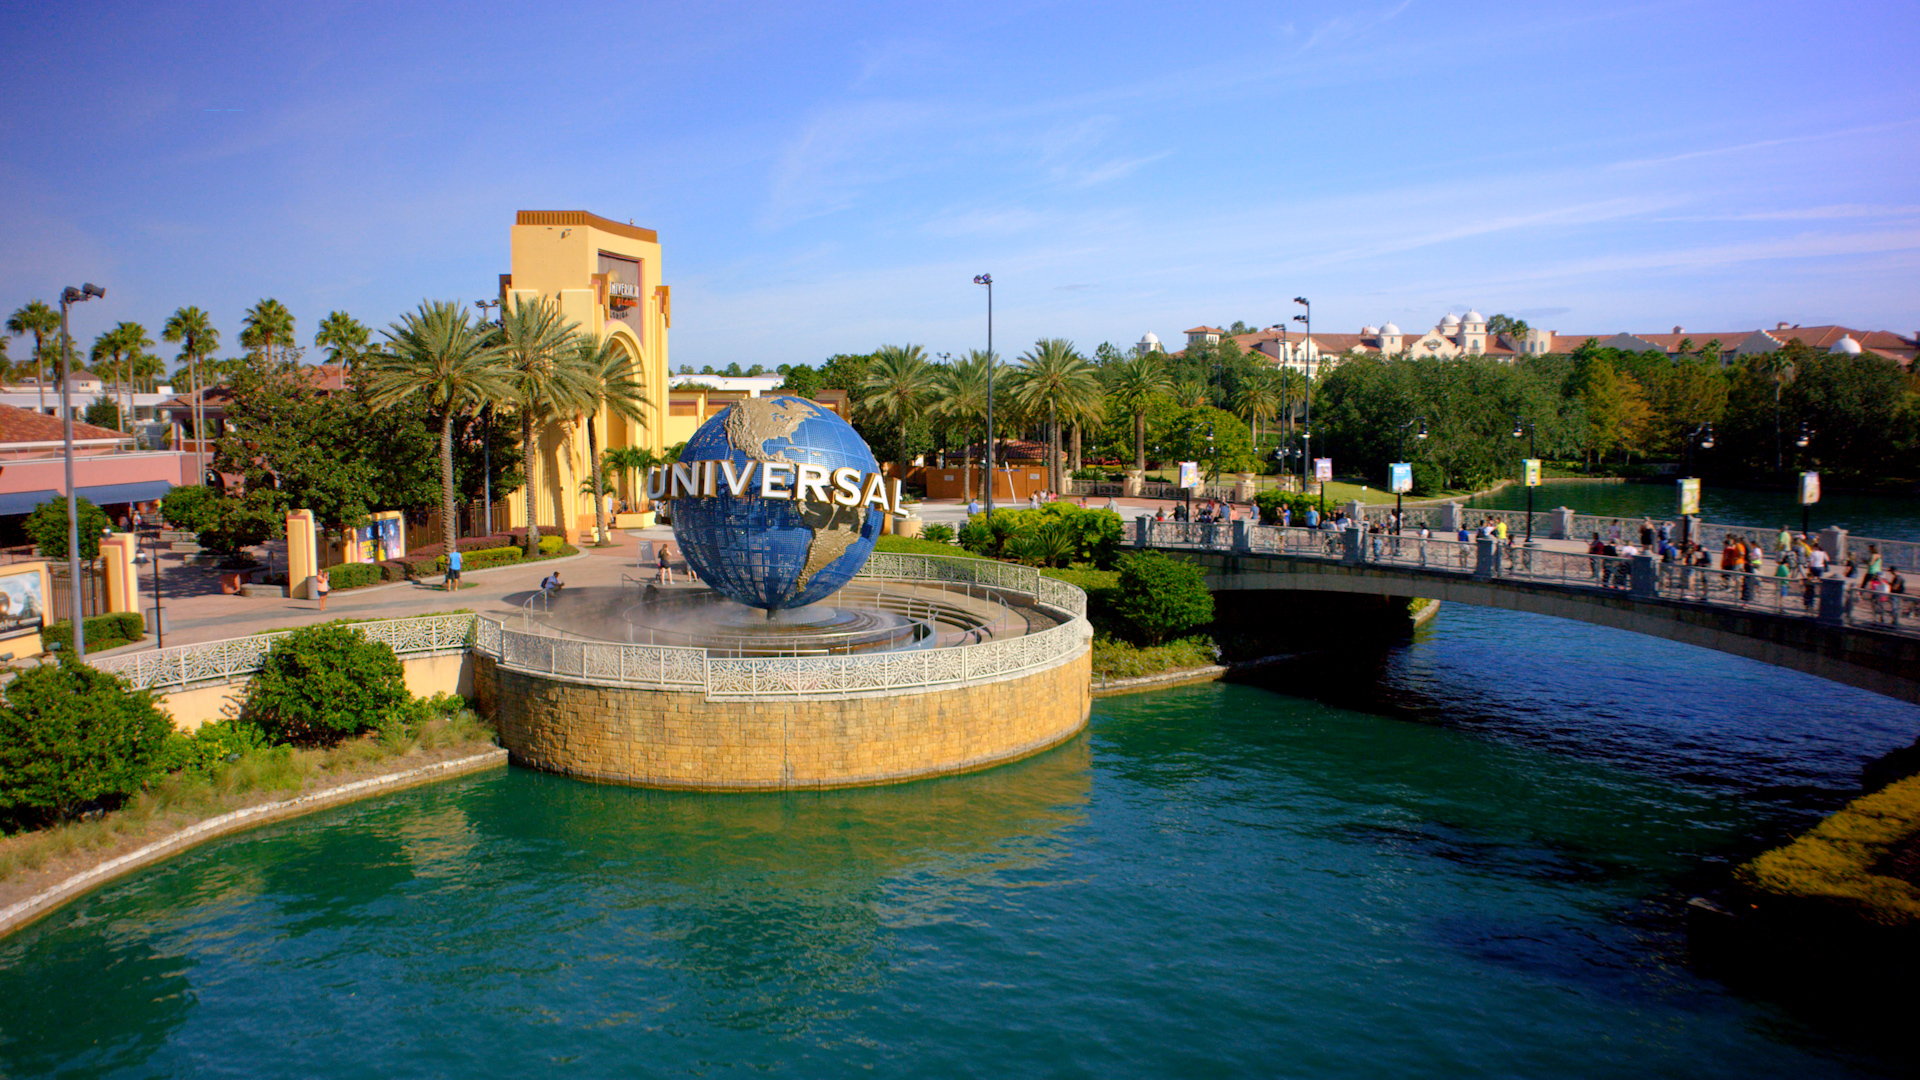 Universal Studios Orlando has 2 special offers for fall